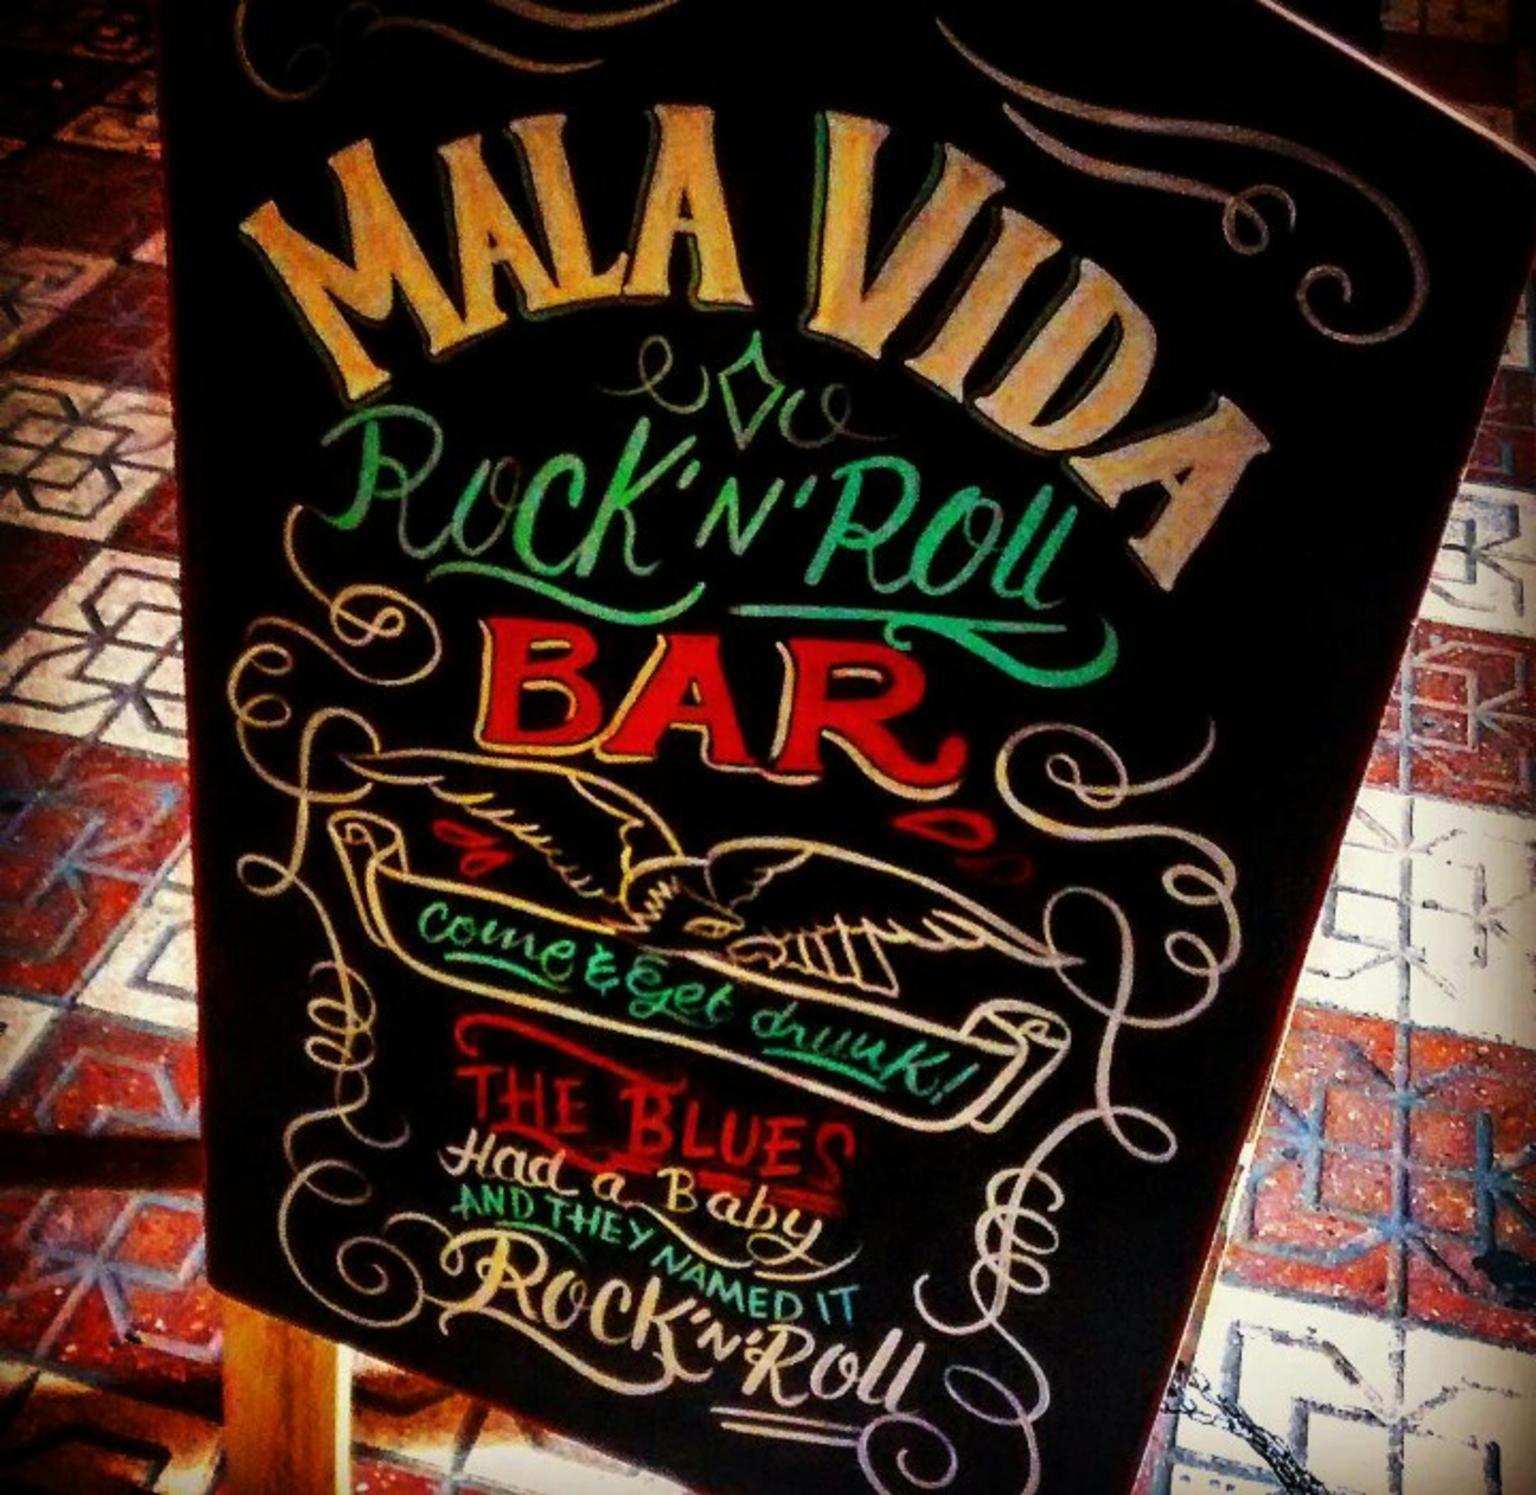 Mala Vida Rock Bar